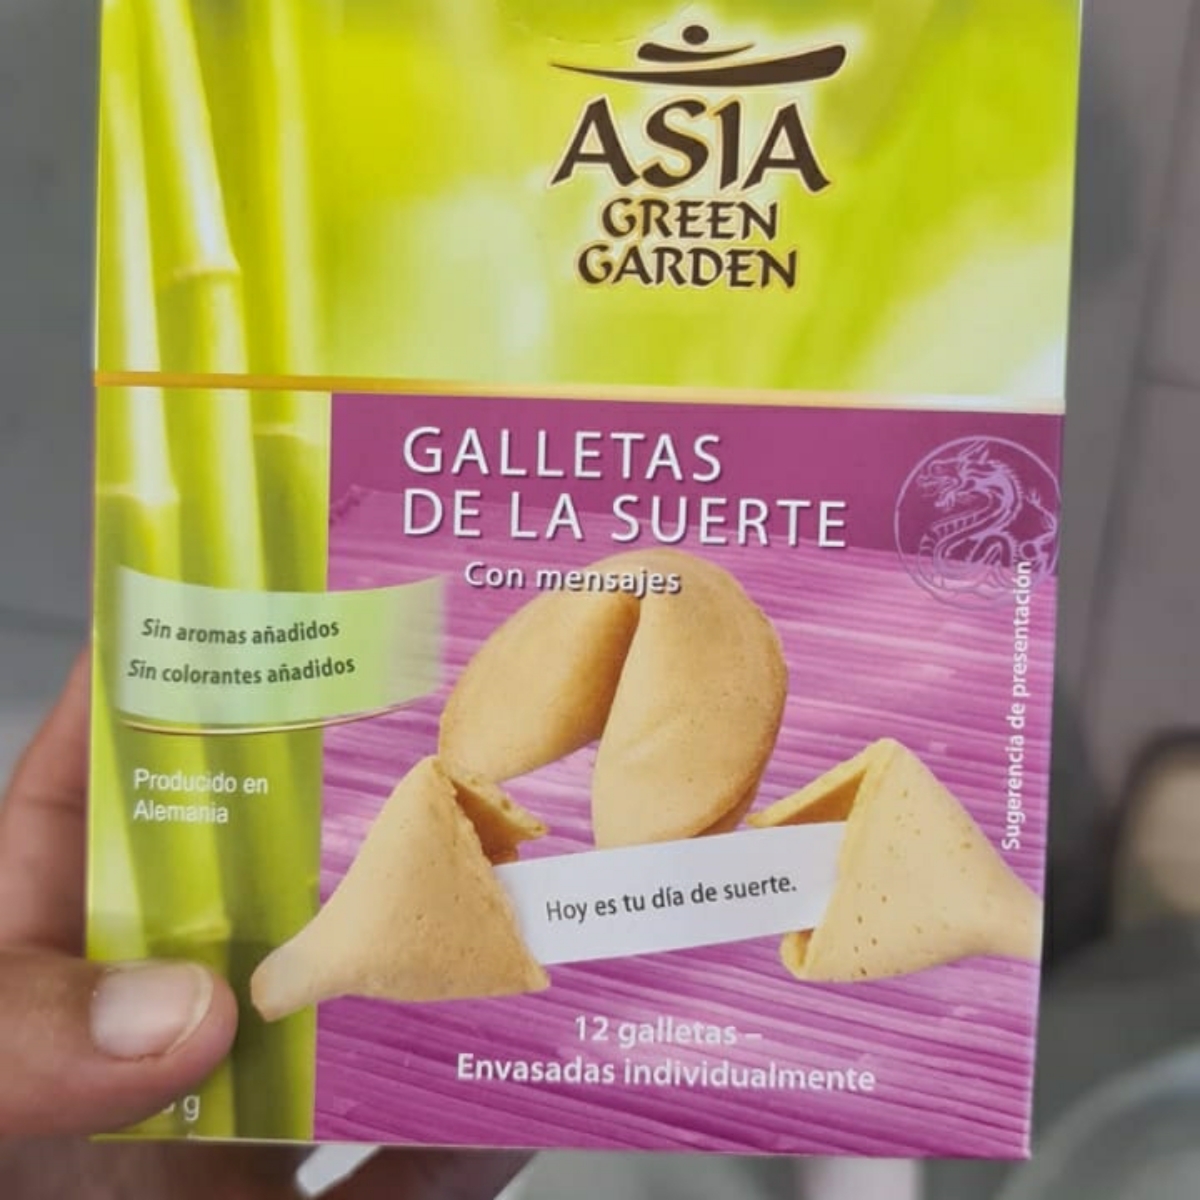 Asia Green Garden Galletas de la suerte Review